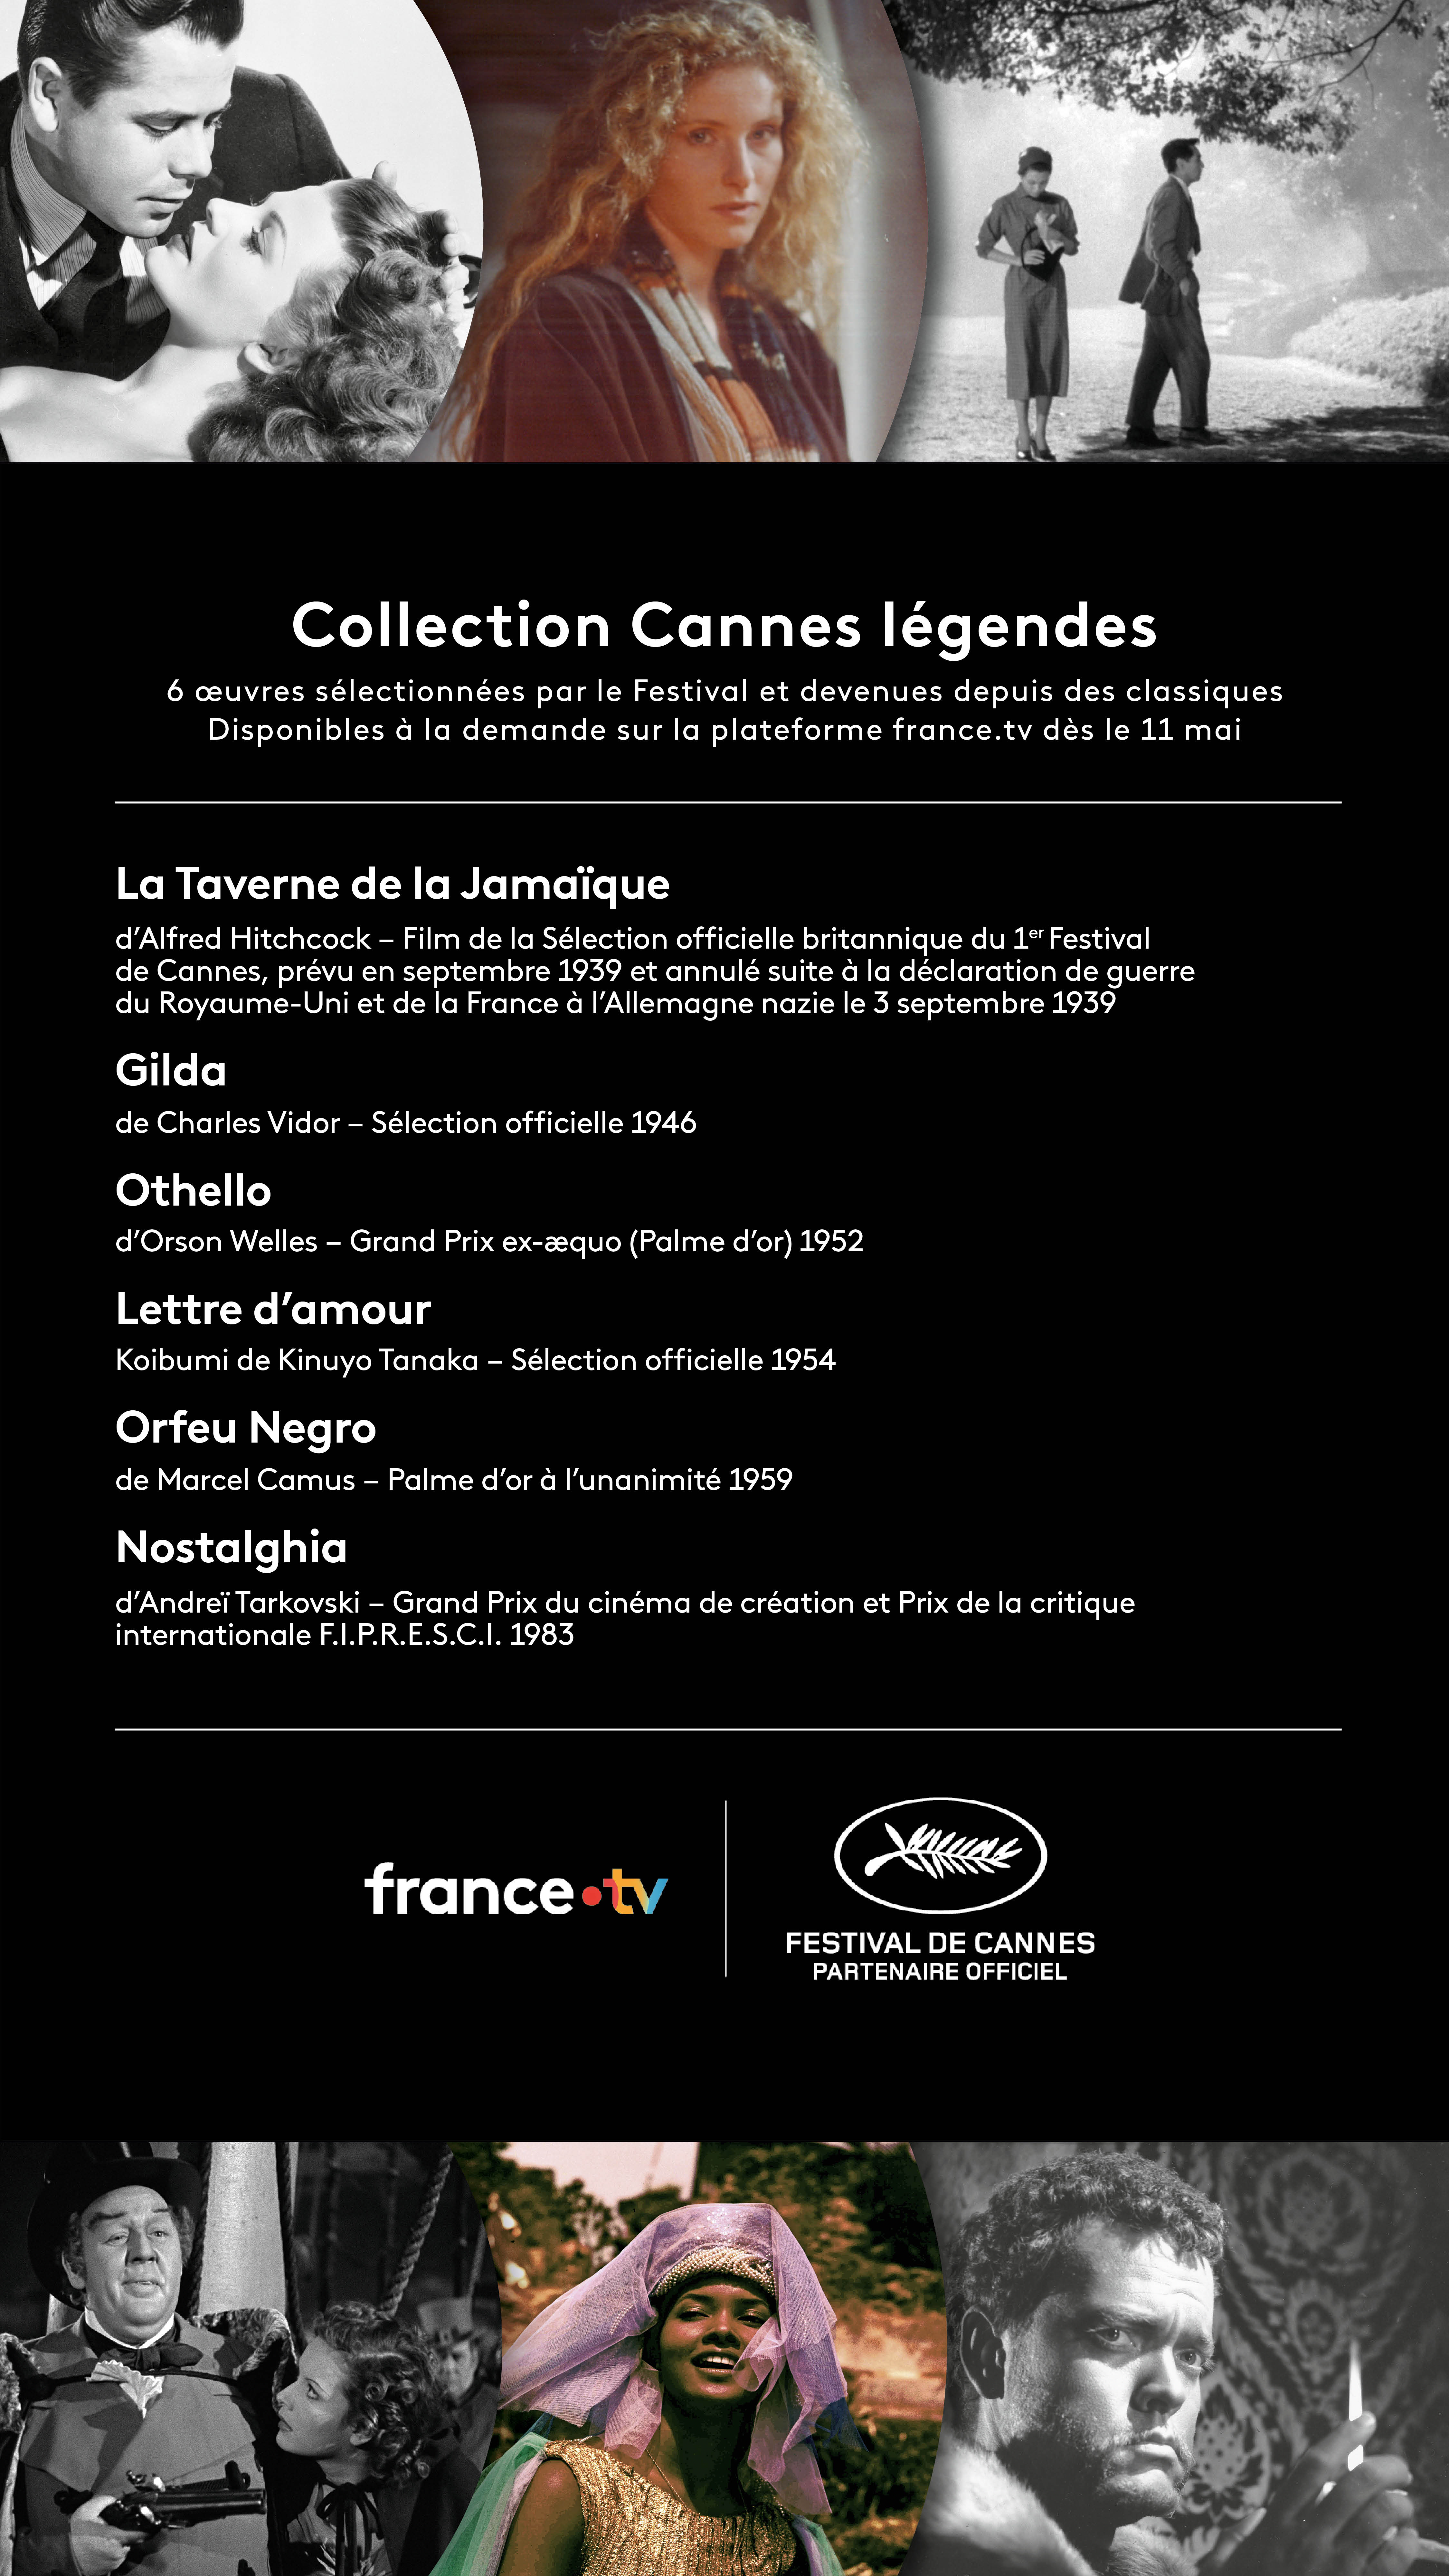 © Cannes légendes